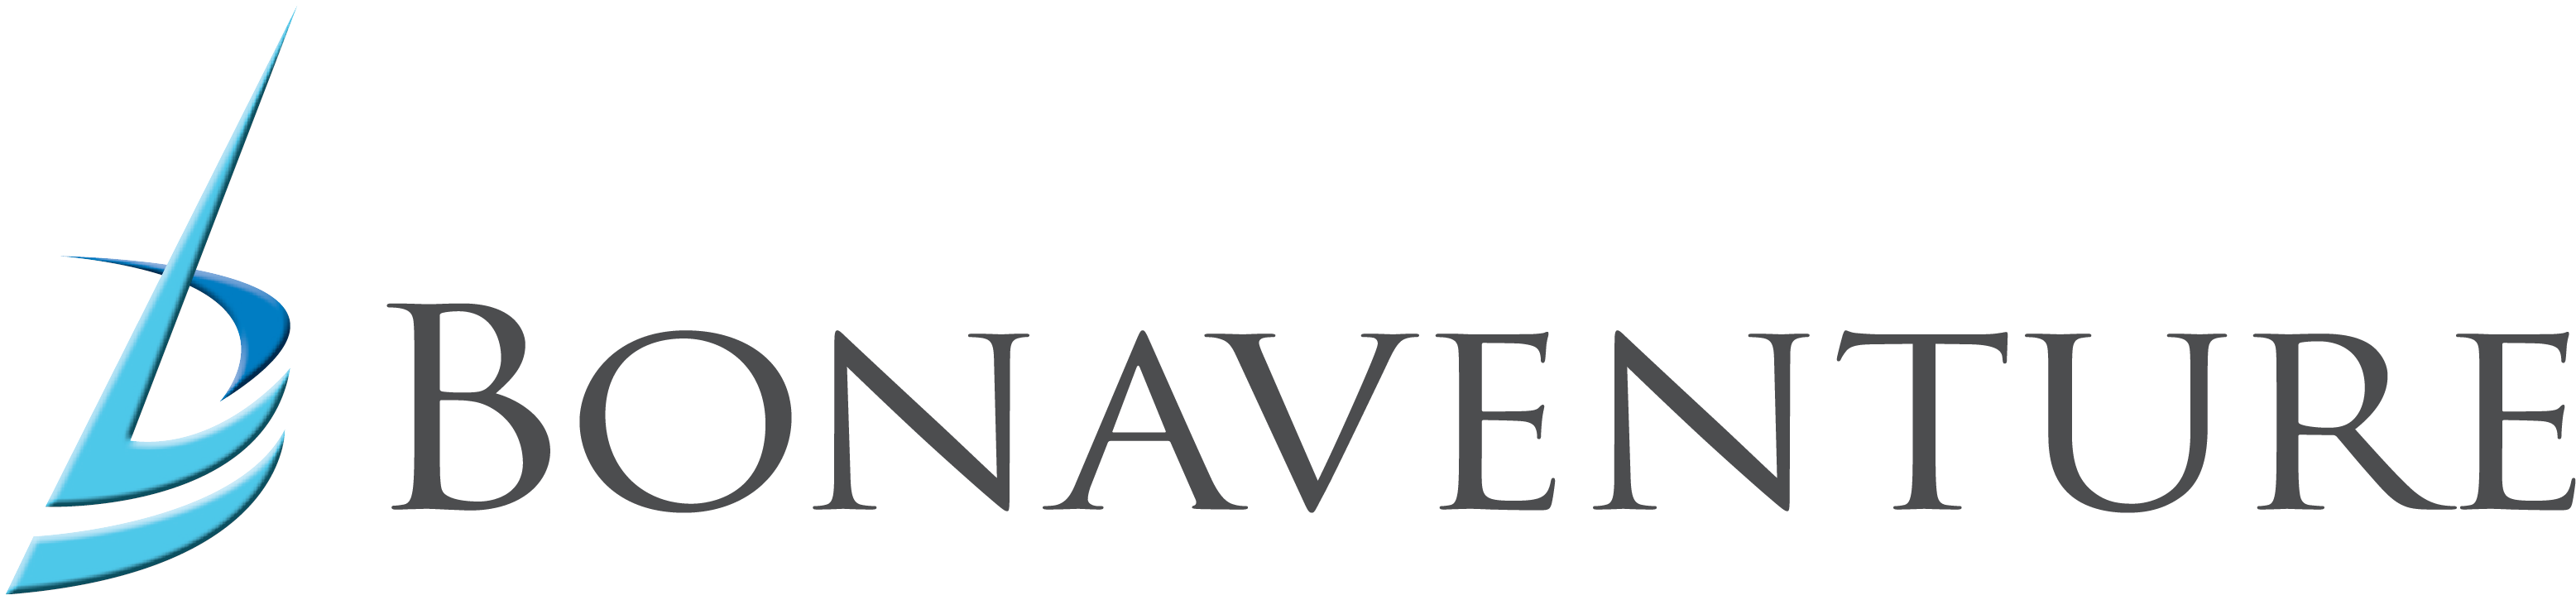 Bonaventure Company Logo